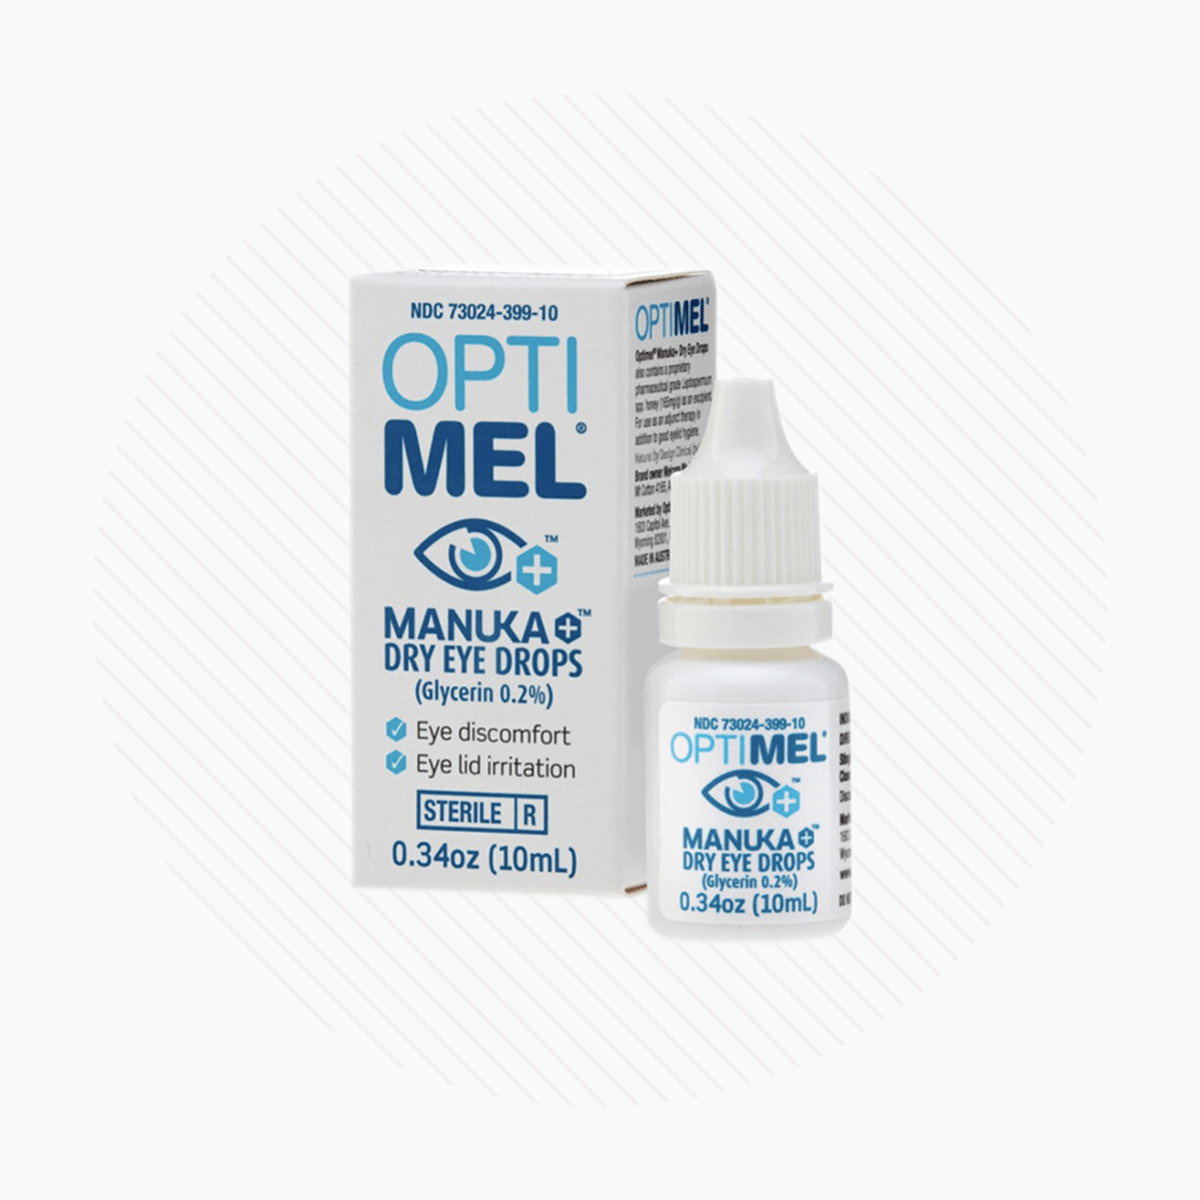 Optimel Manuka + Dry Eye Drops 0.2 %, 0.34 oz (10mL Bottle) - Dryeye Rescue